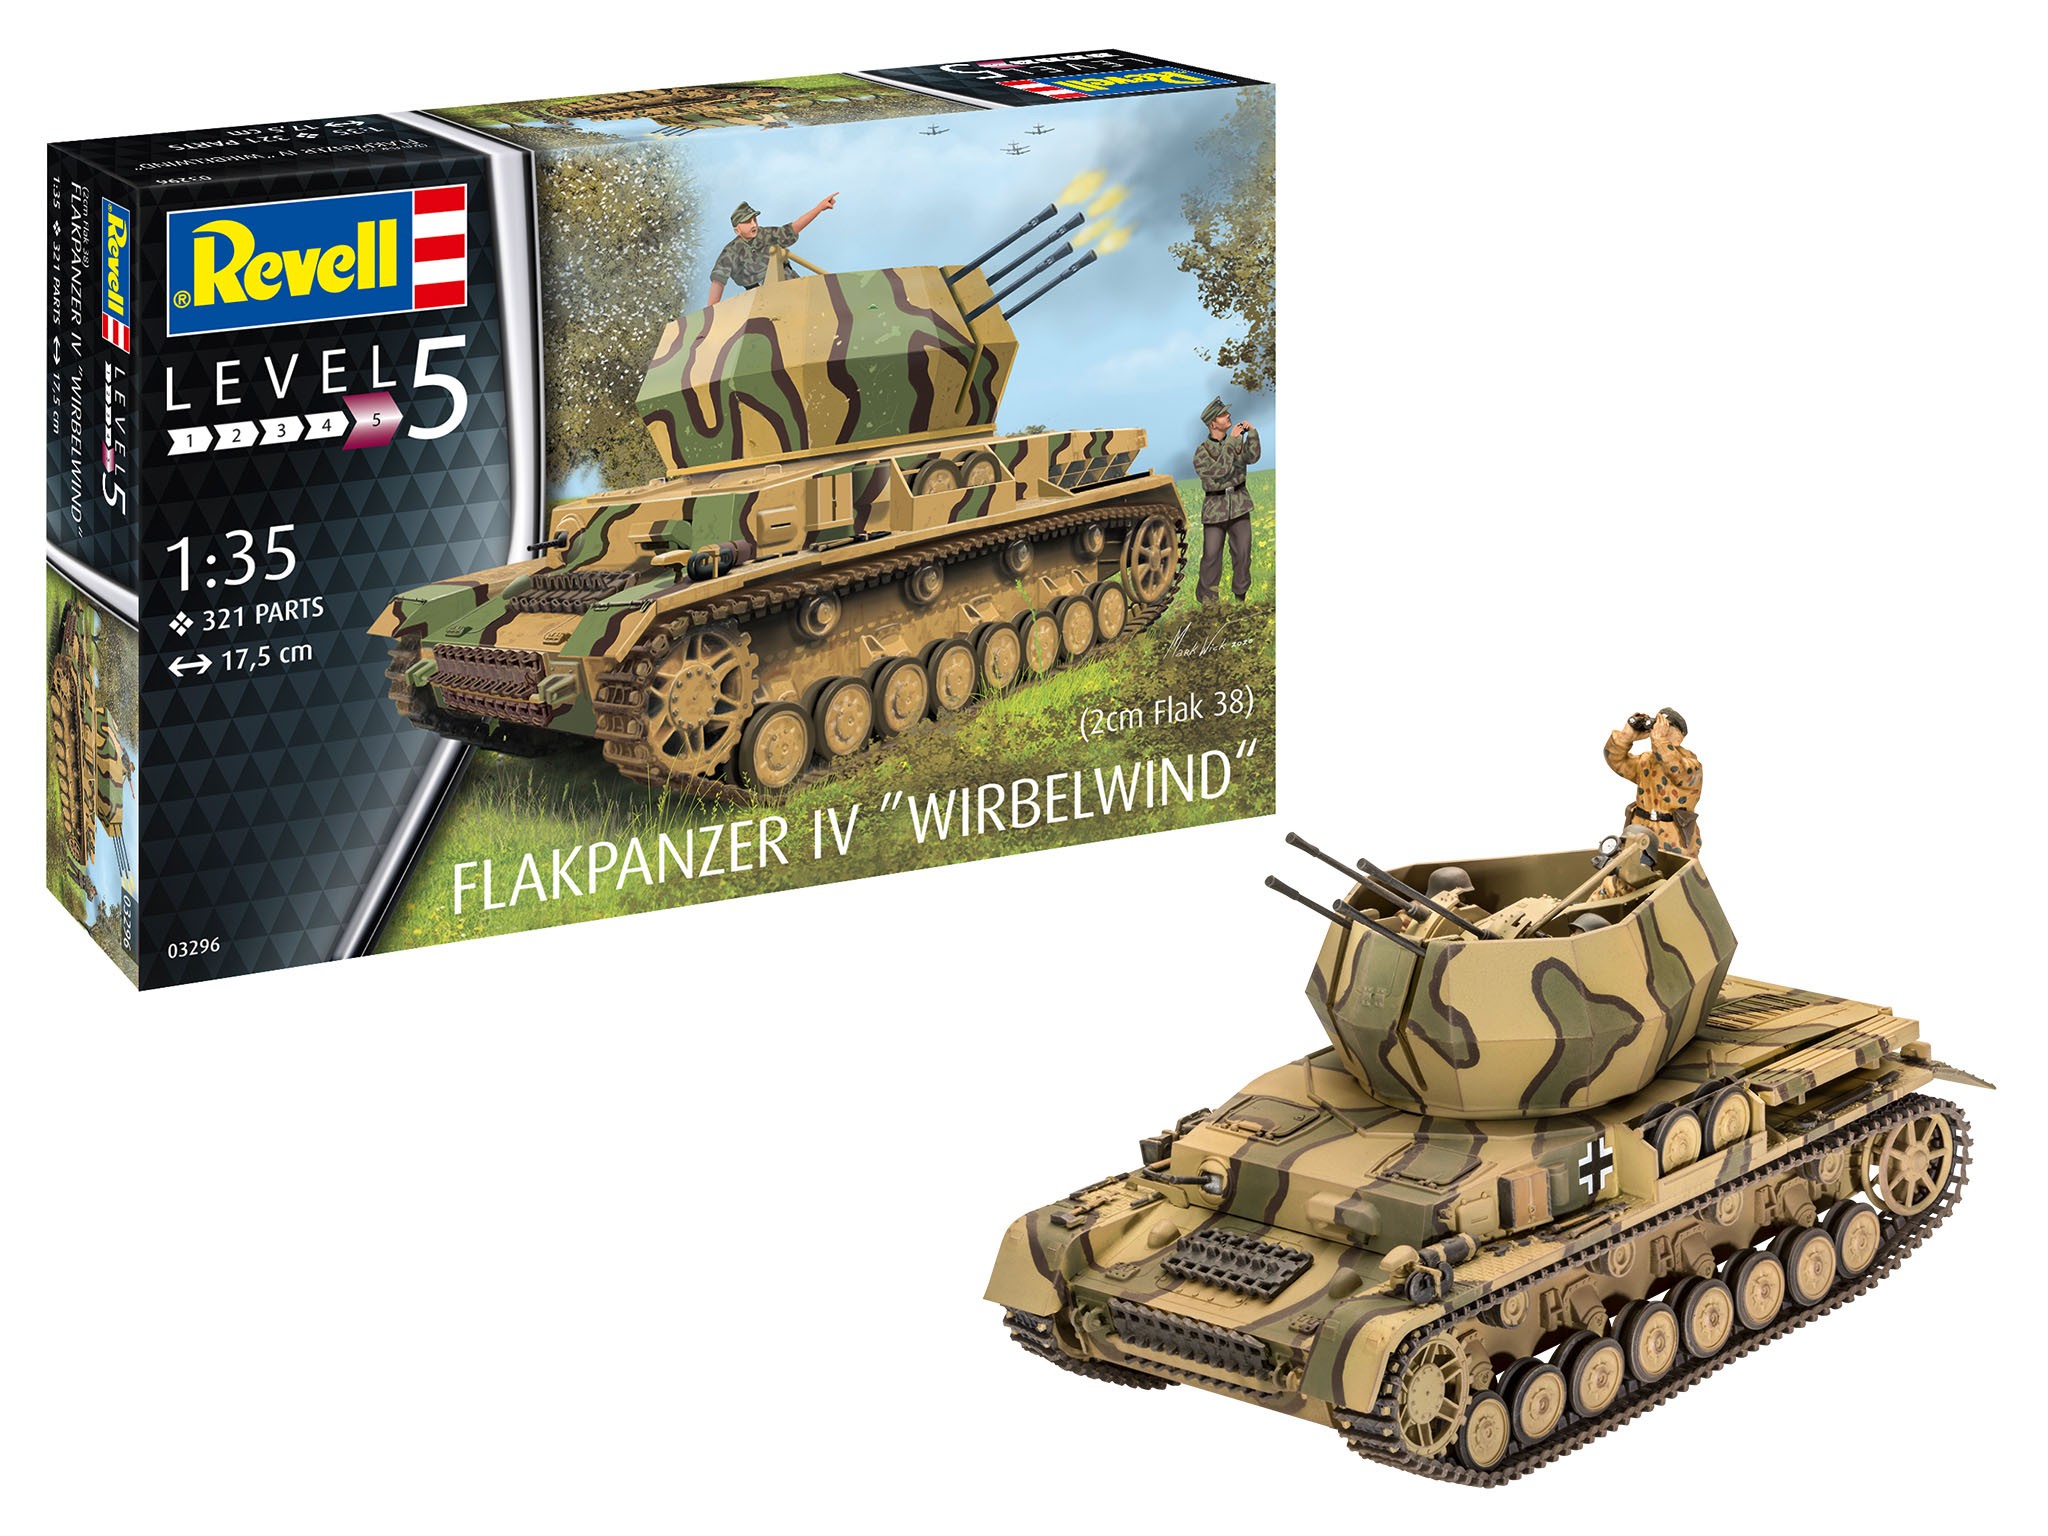 Revell 03296 Flakpanzer IV whirlwind  ( 2cm flak 38 )  1:35